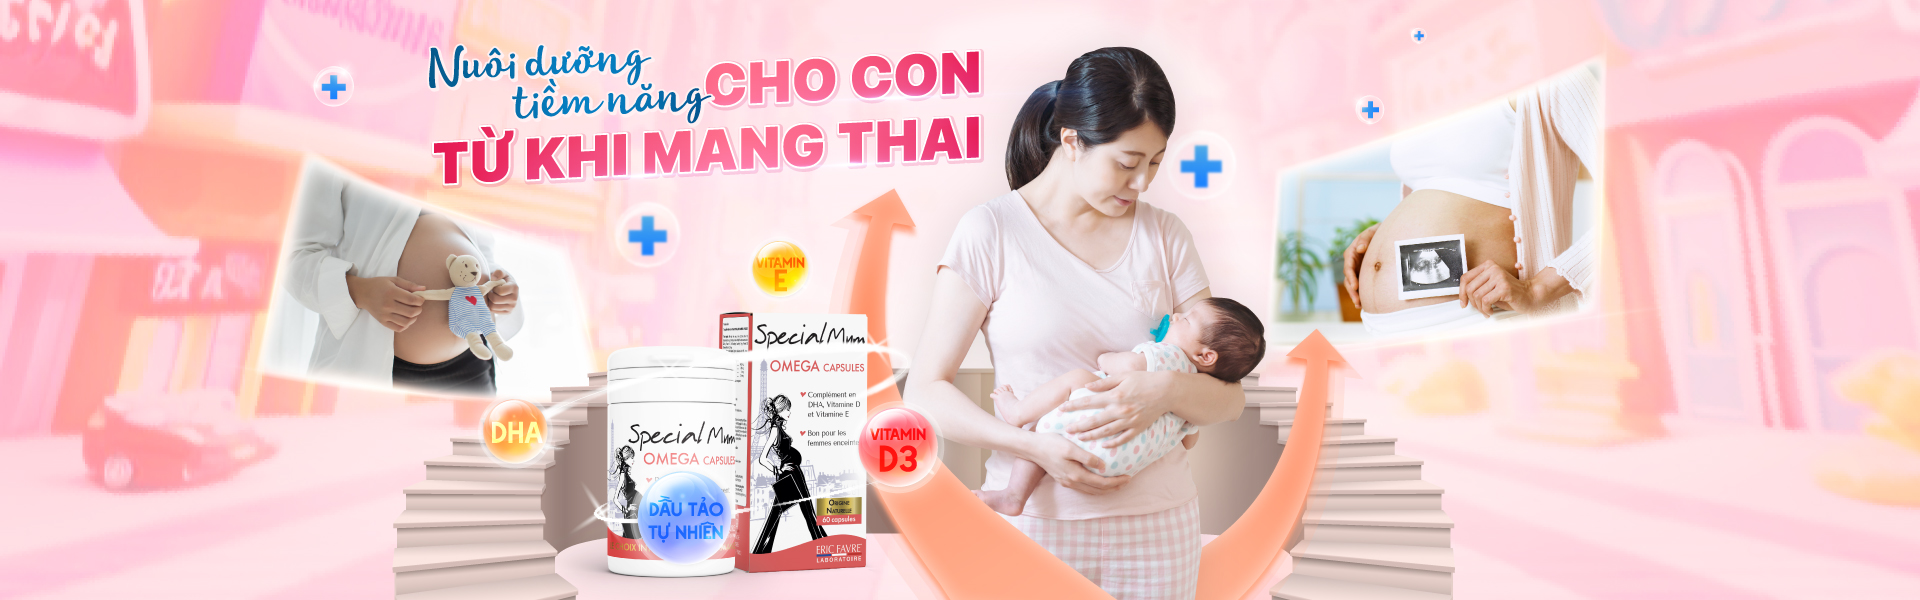 special-mum-omega-nuoi-con-thong-minh-tu-khi-mang-thai